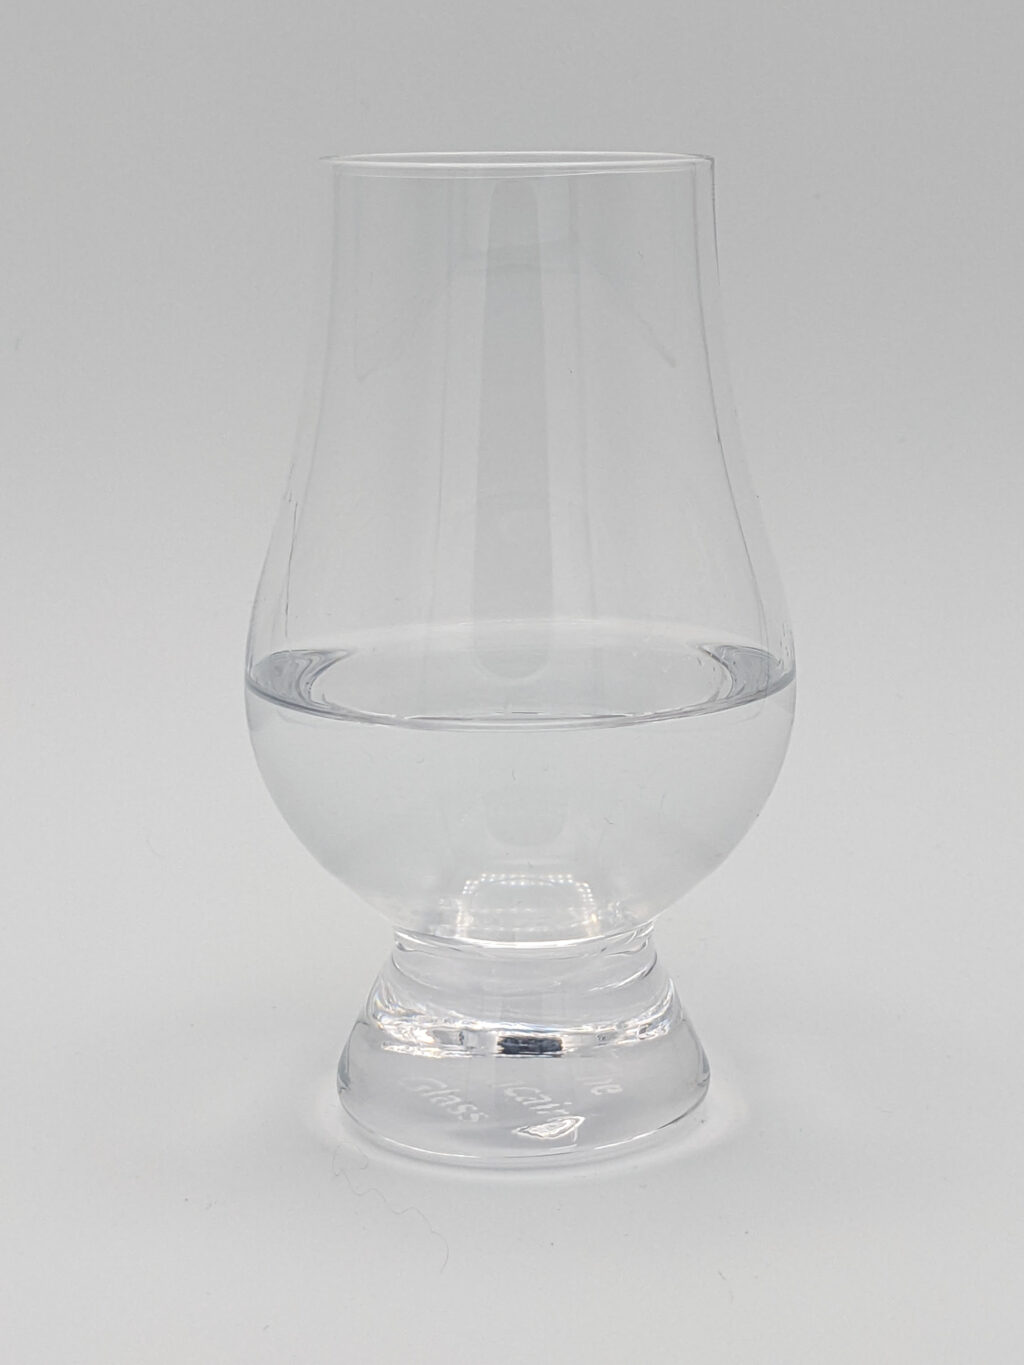 Clear liquid in a Glencairn glass